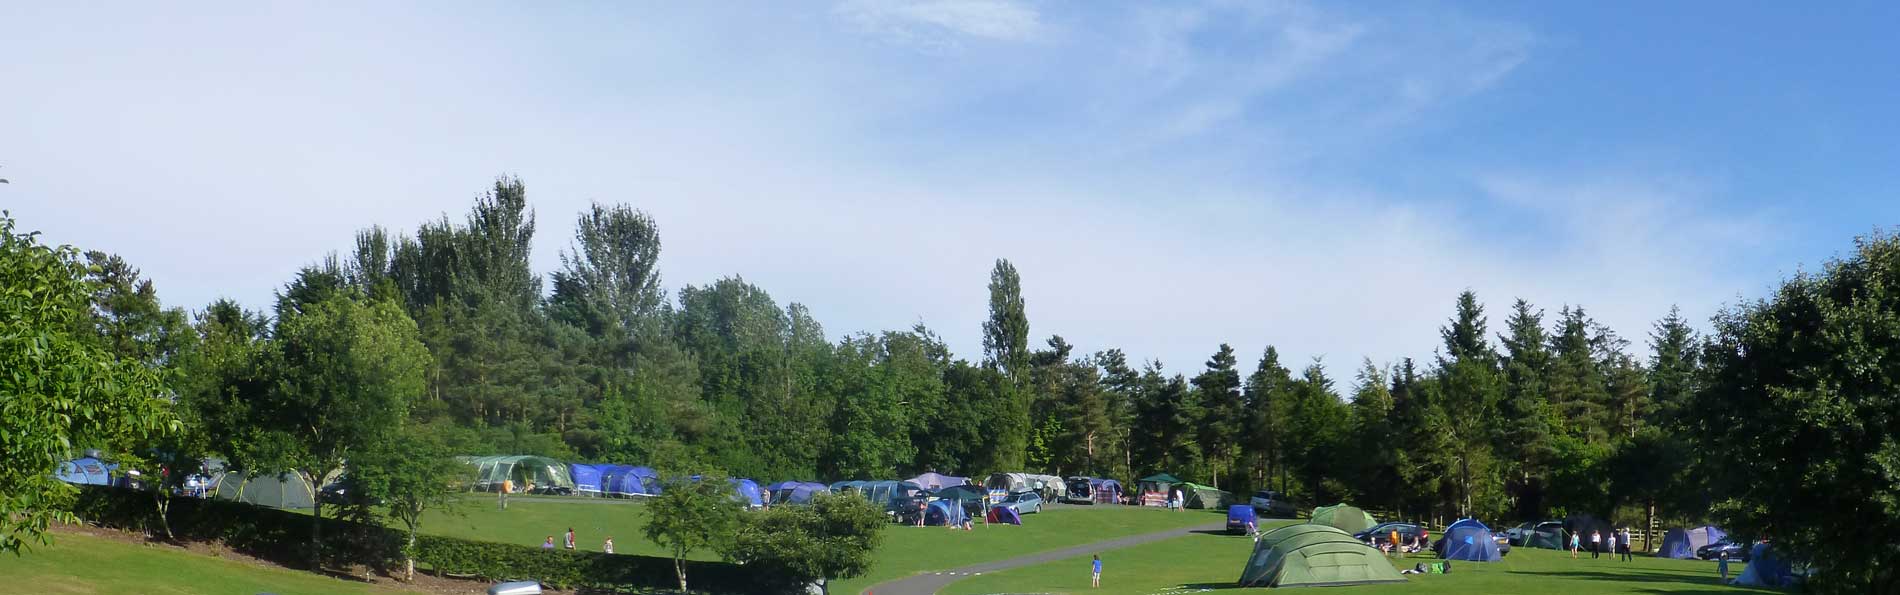 Park Foot Campsite